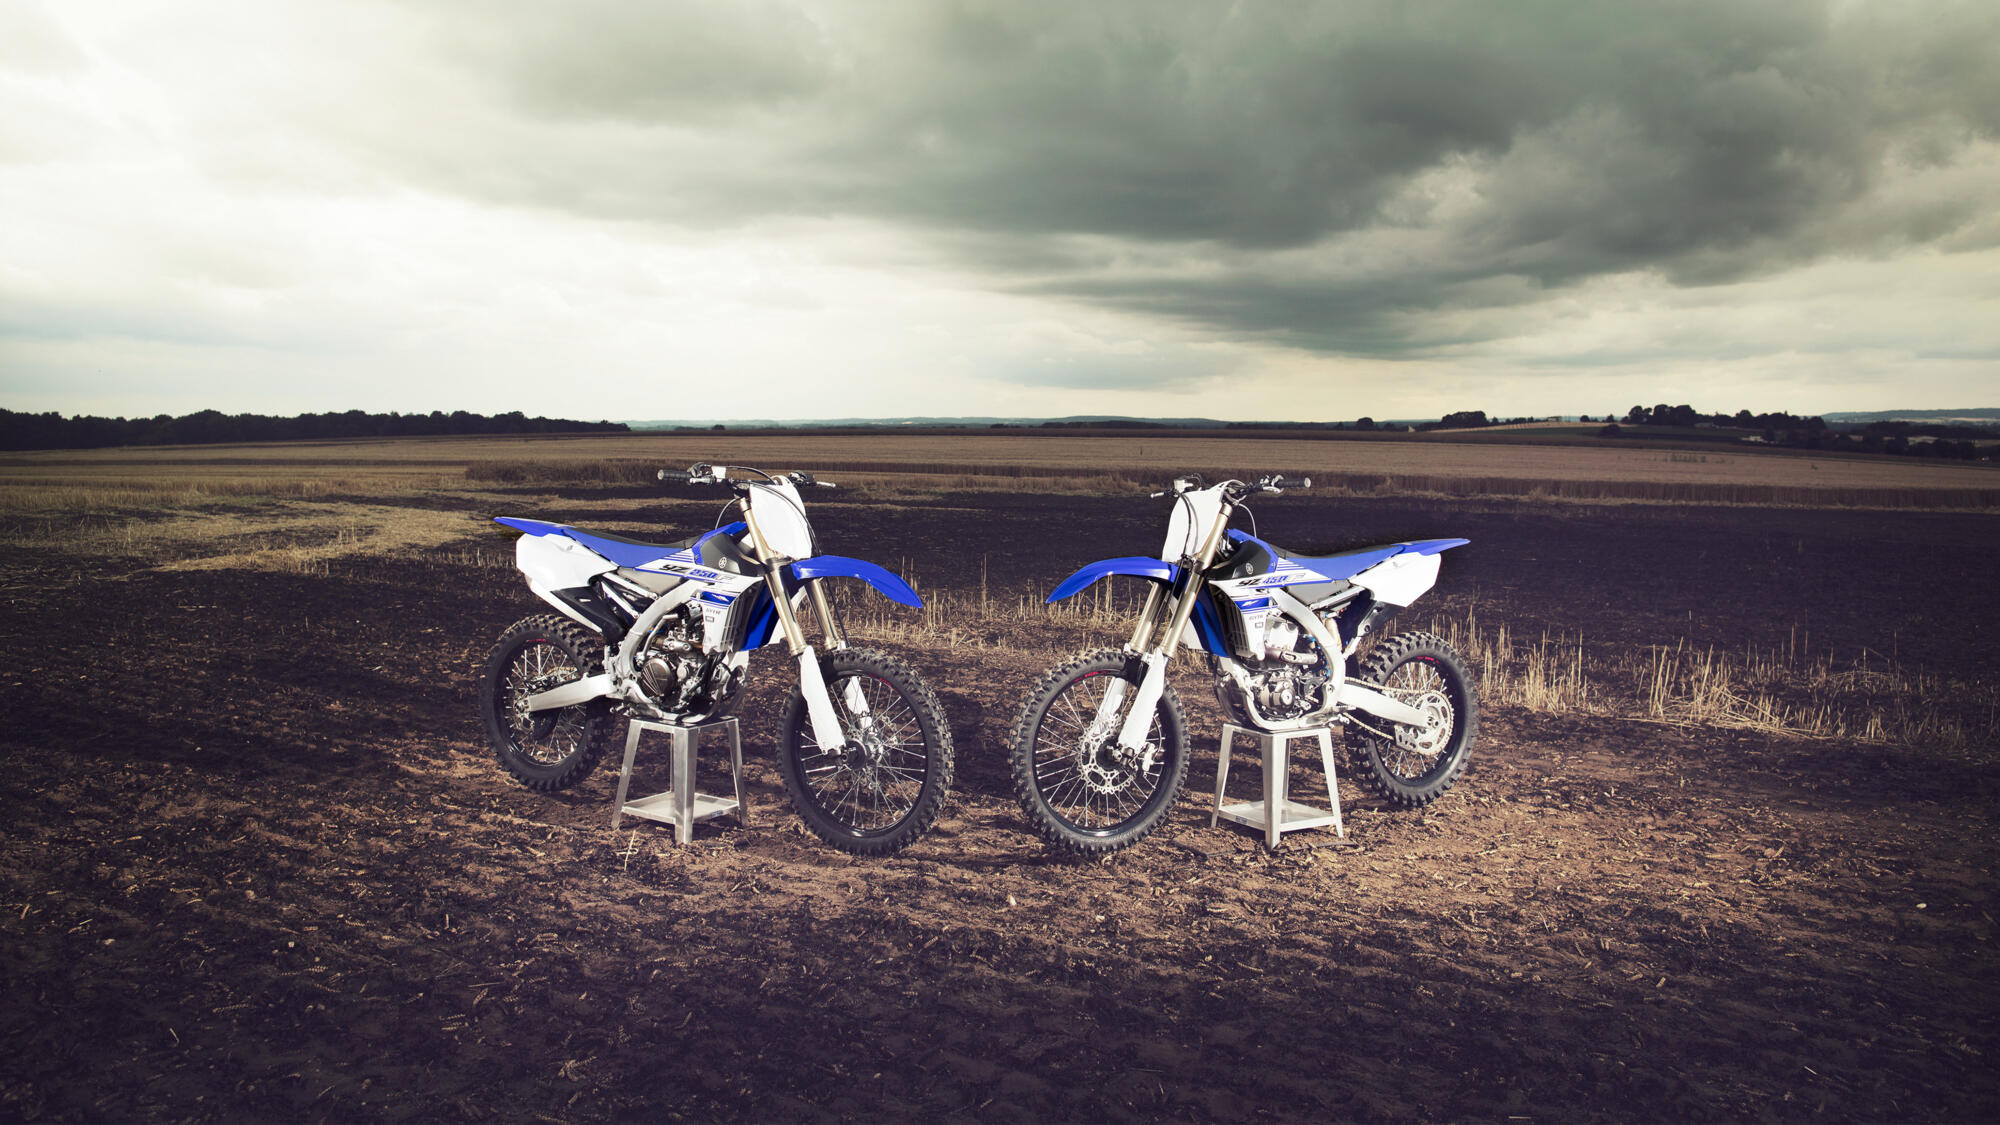 YZ450F - Motorcycles - Yamaha Motor